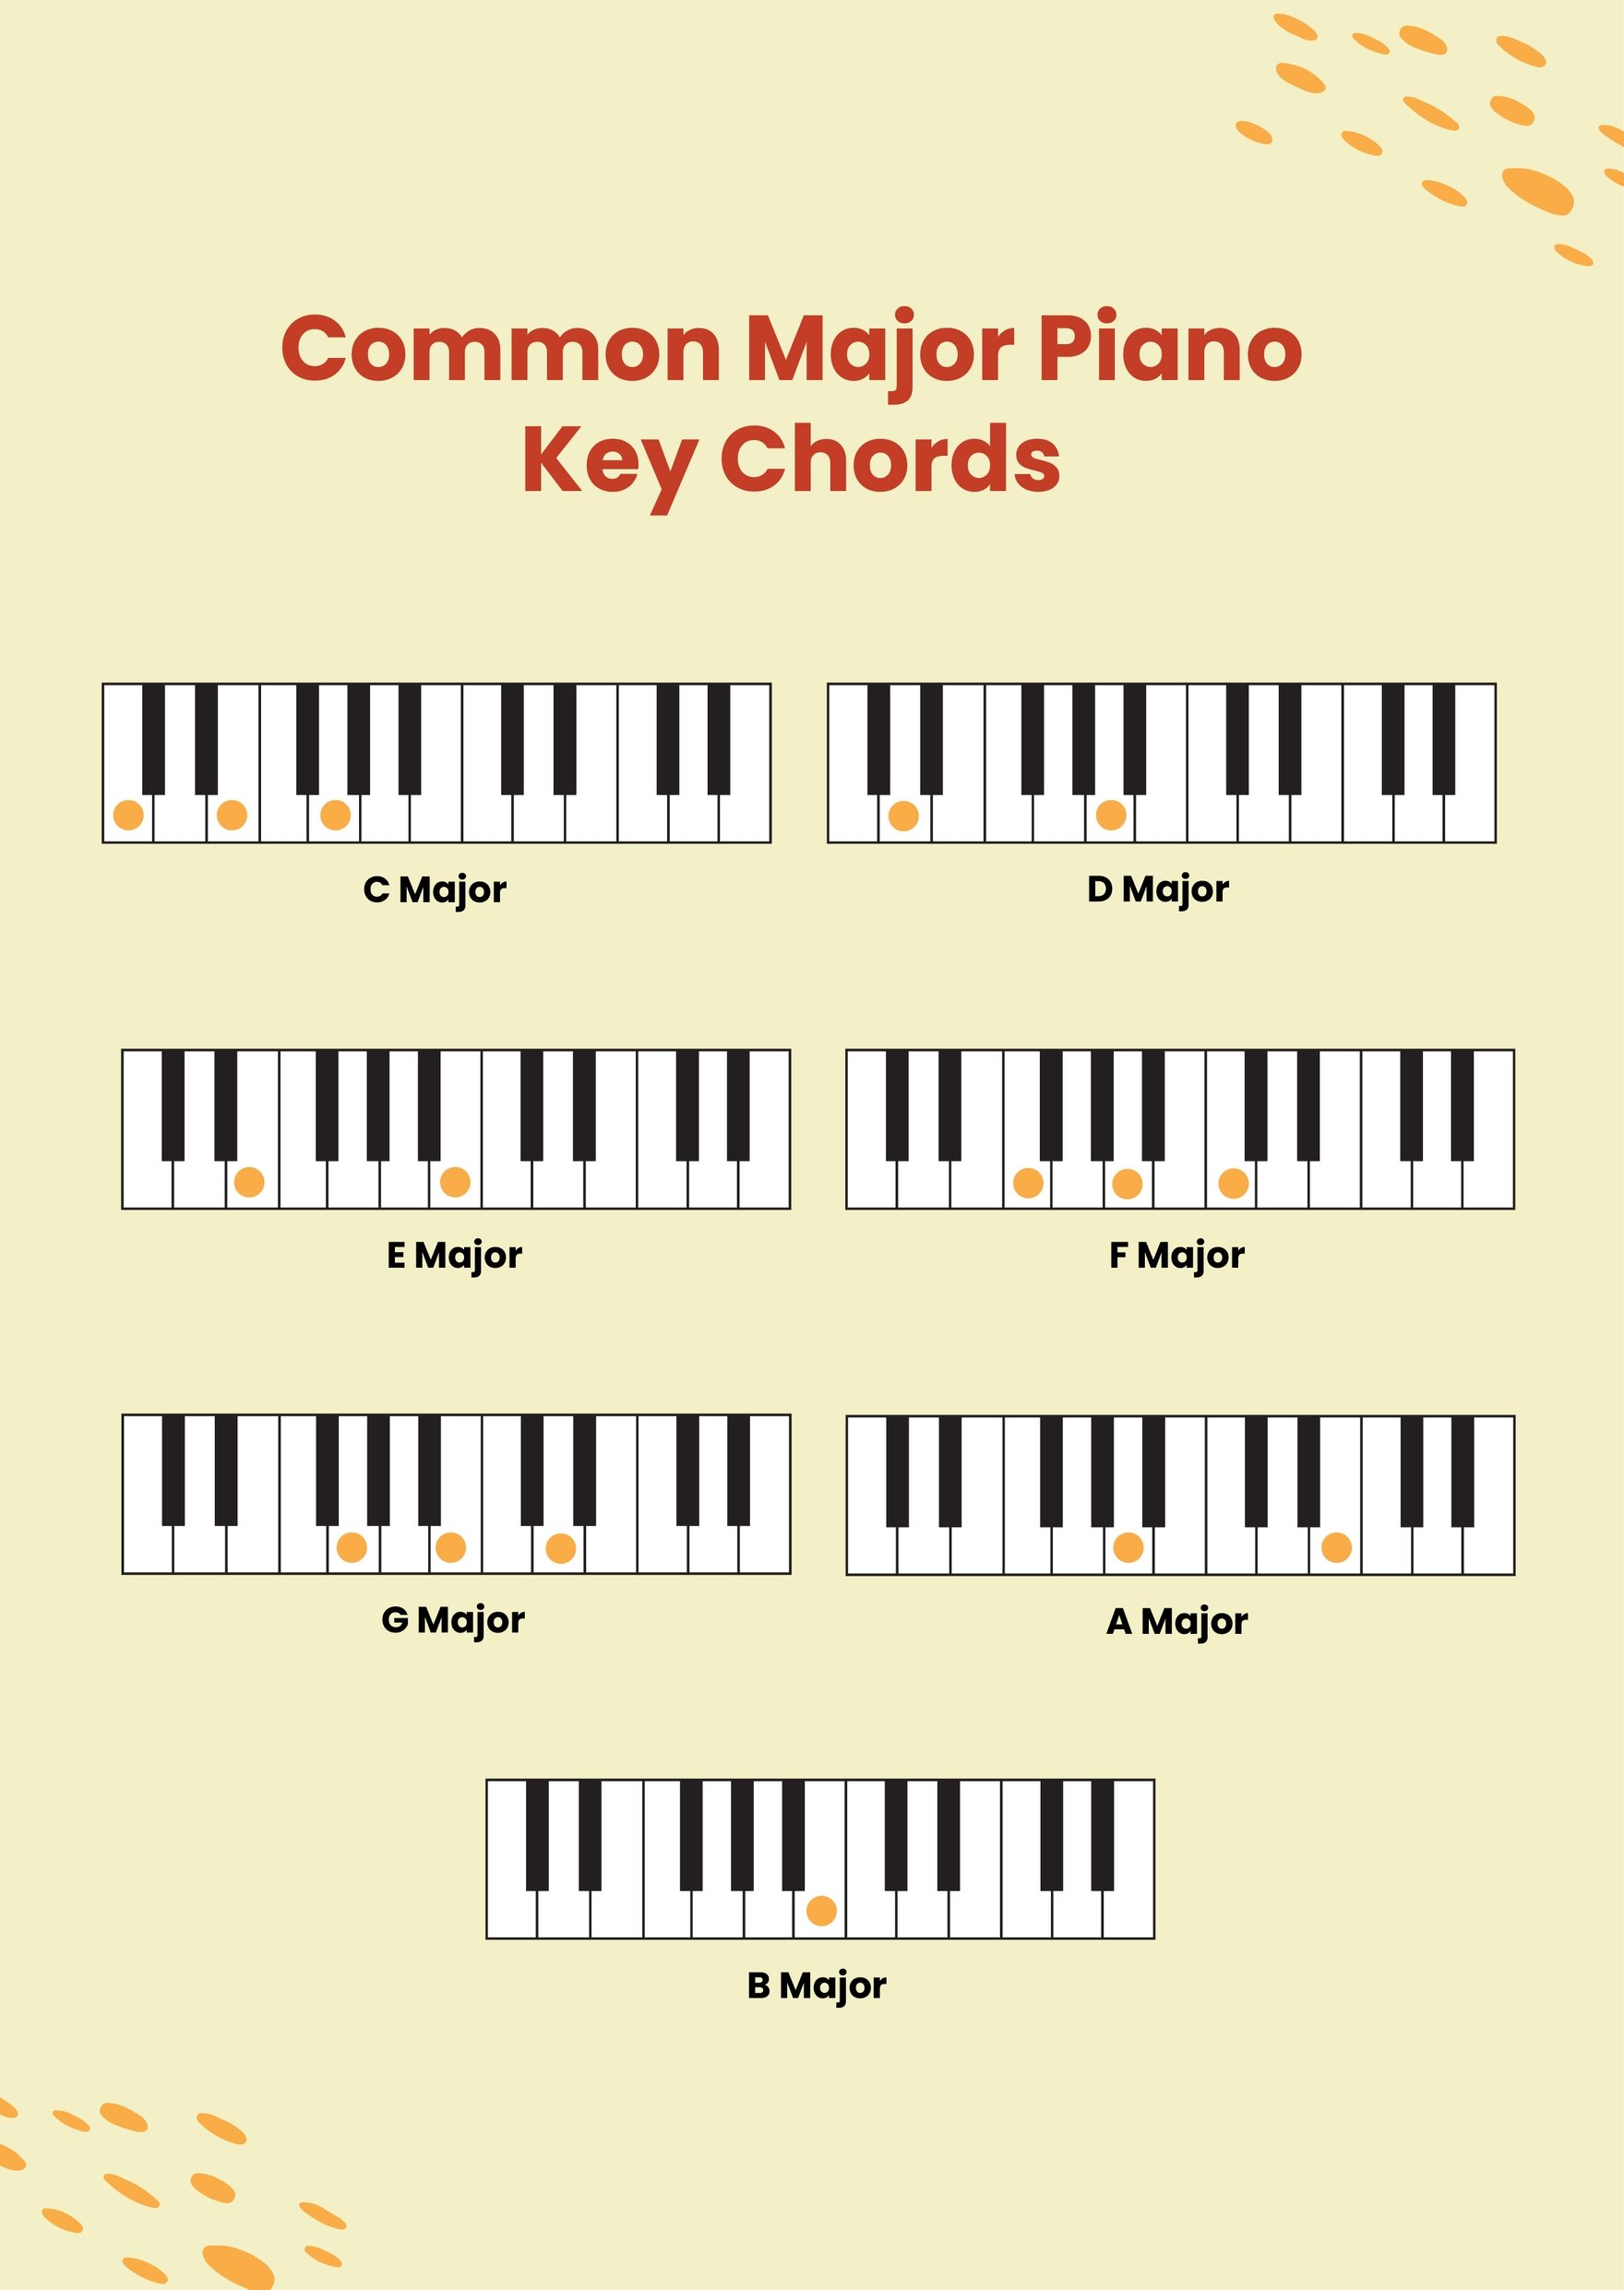 Keys Chord Chart For Piano in PDF, Illustrator